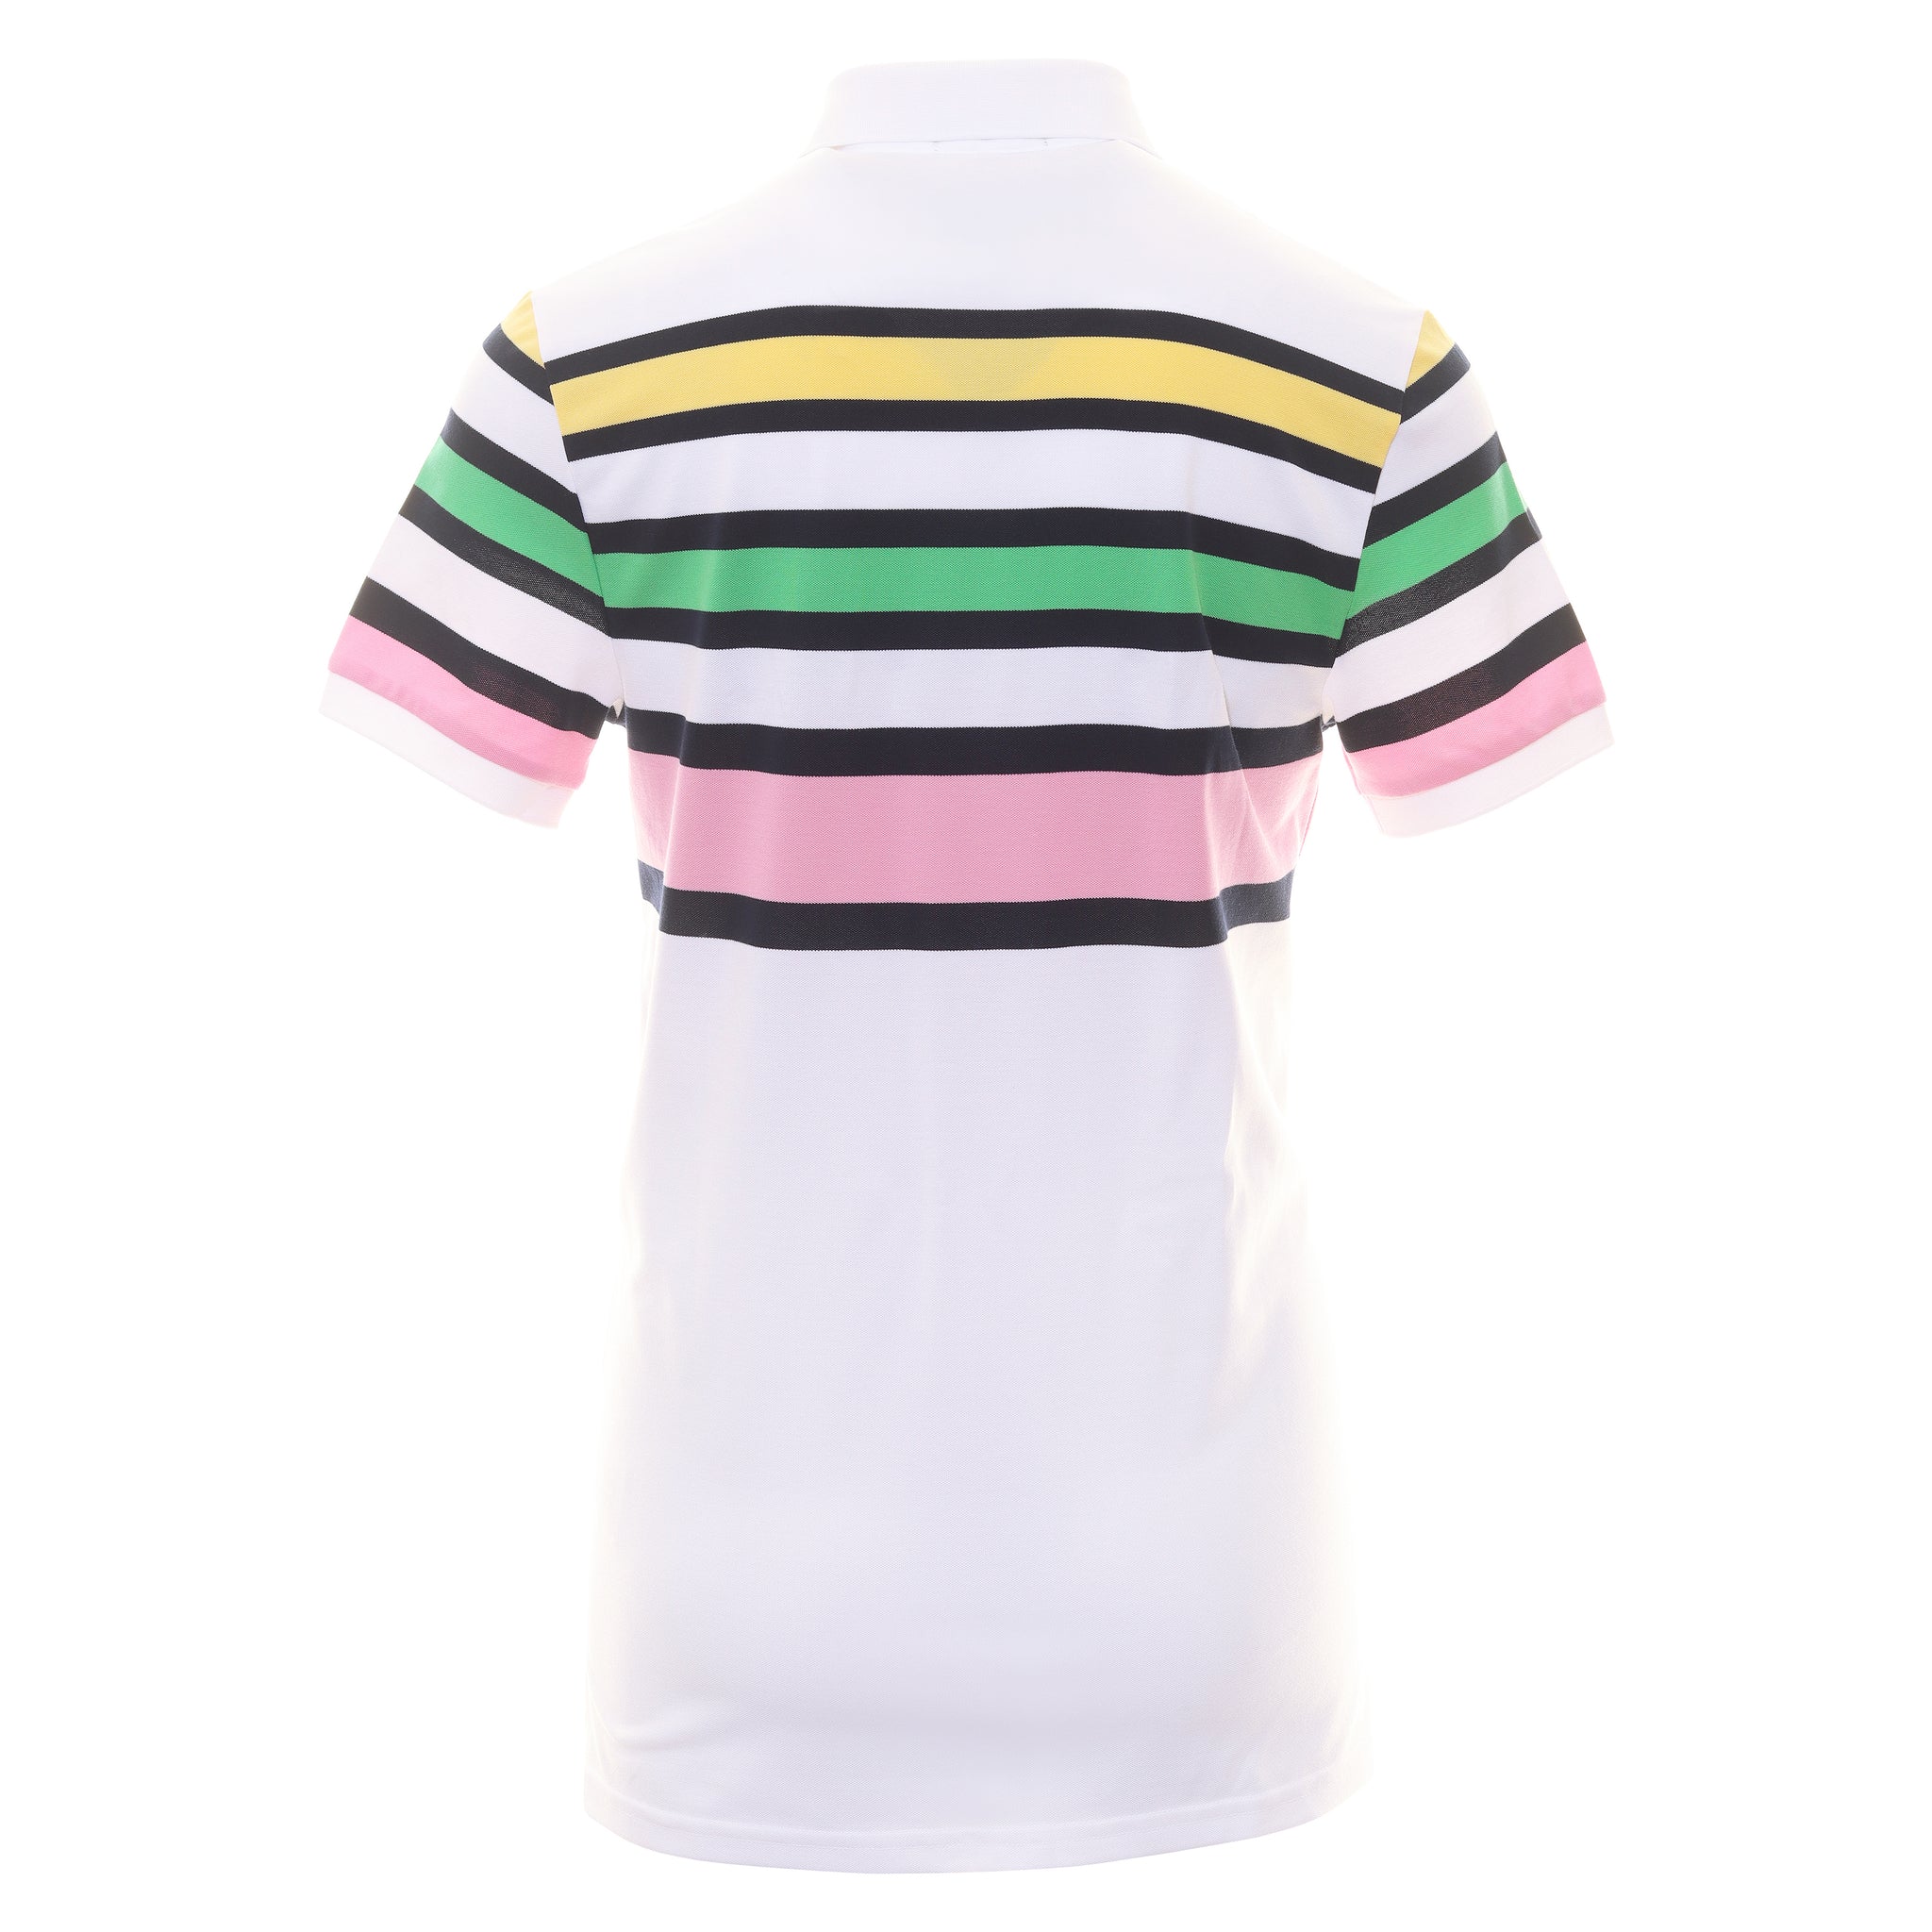 rlx-ralph-lauren-block-stripe-polo-shirt-785916160-ceramic-white-multi-001